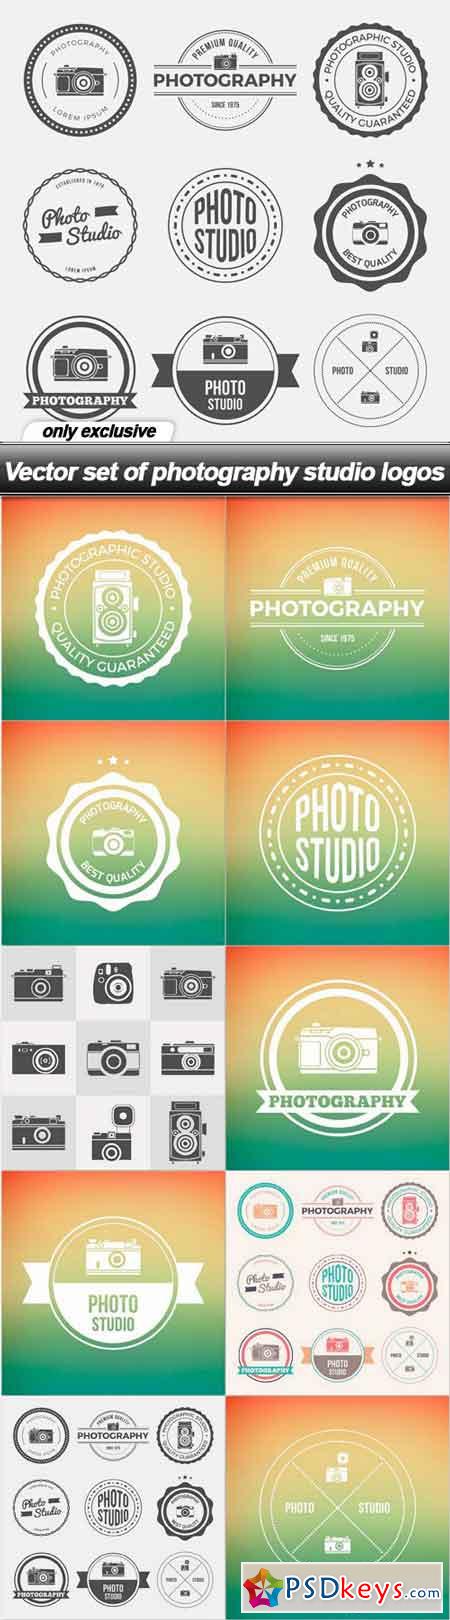 Vector set of photography studio logos - 10 EPS